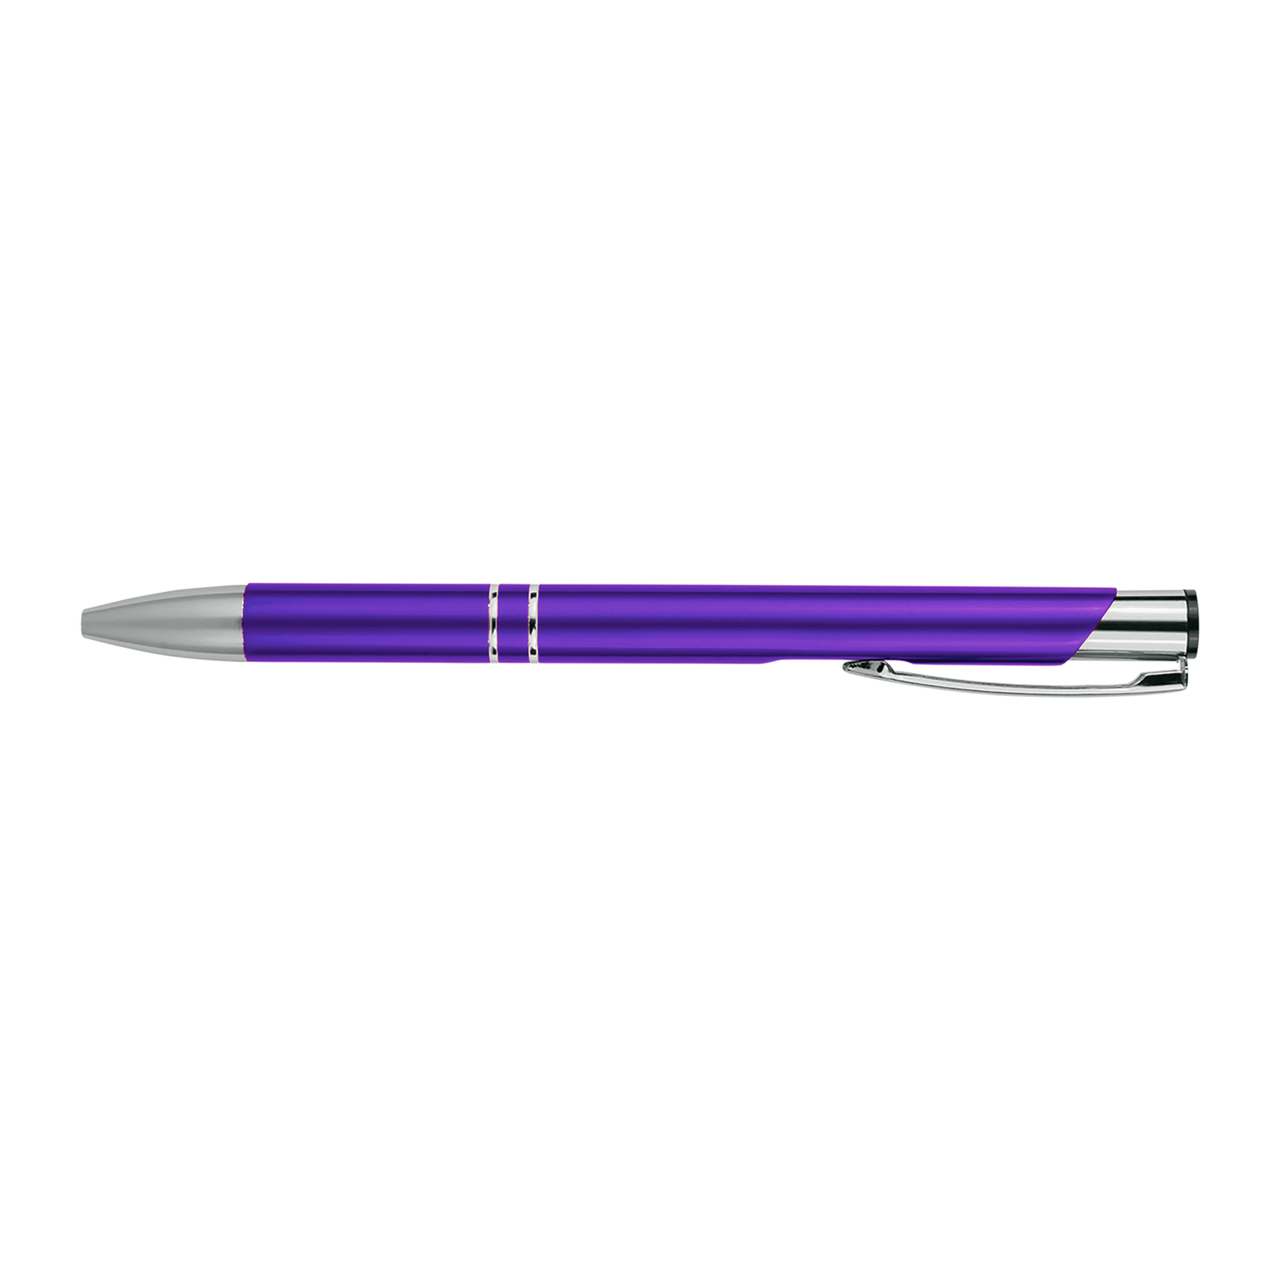 Best Coworker Ever! Metal Pens | Motivational Writing Tools Office Supplies Coworker Gifts Stocking Stuffer Baum Designs